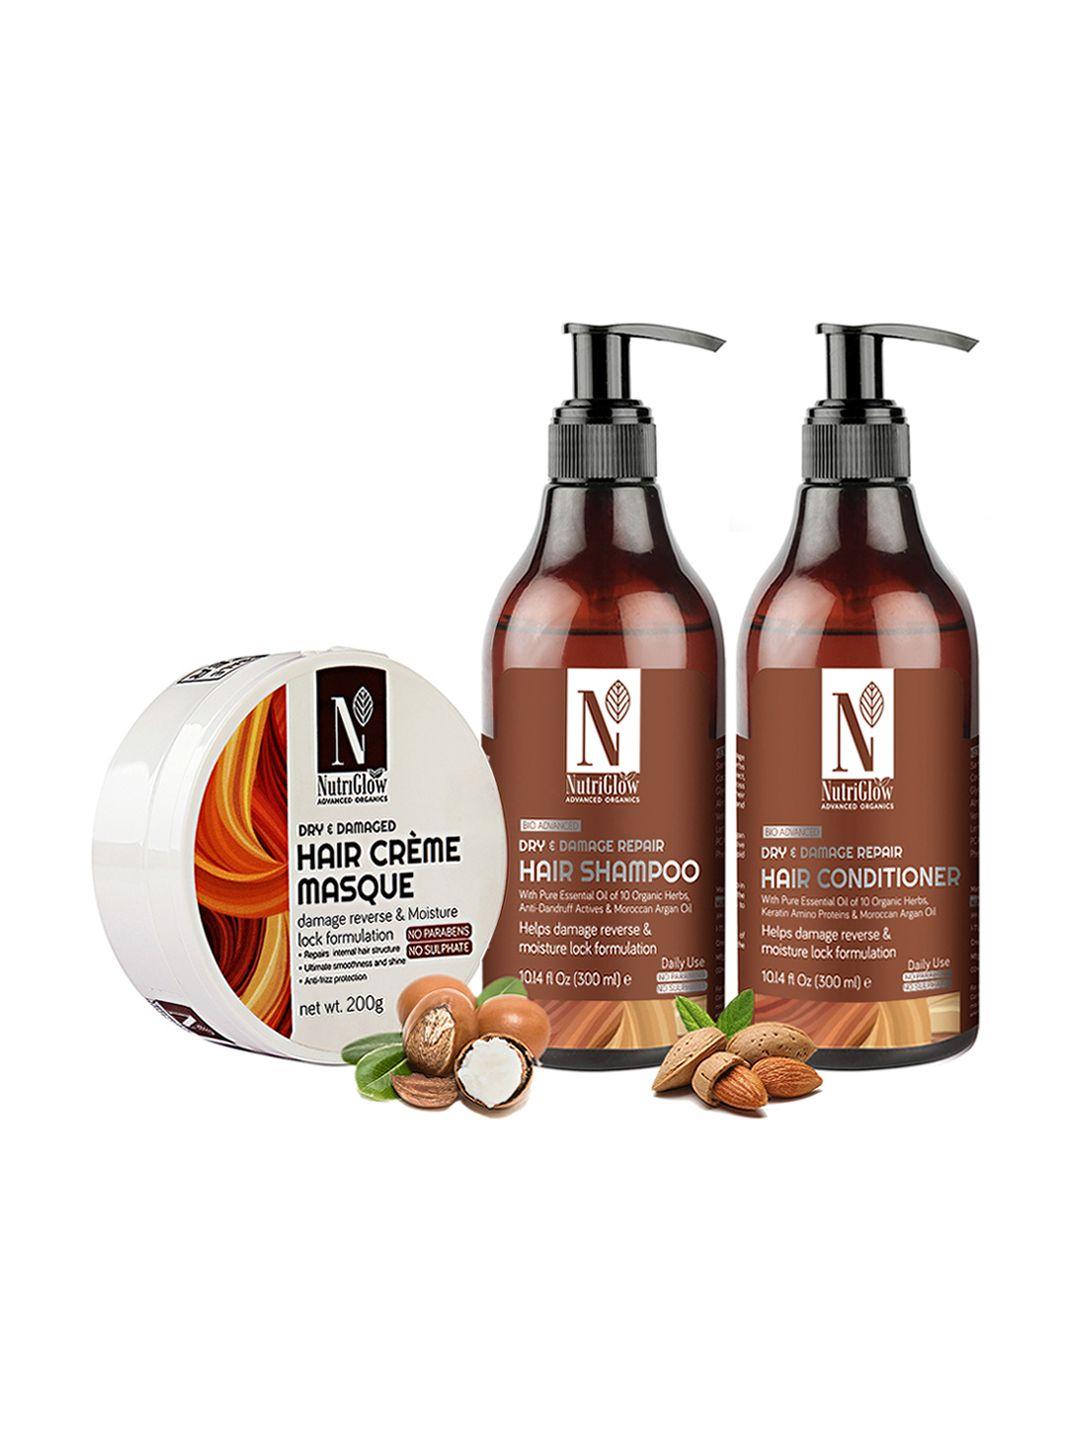 nutriglow advanced organics dry damaged hair creme masque, hair shampoo & conditioner